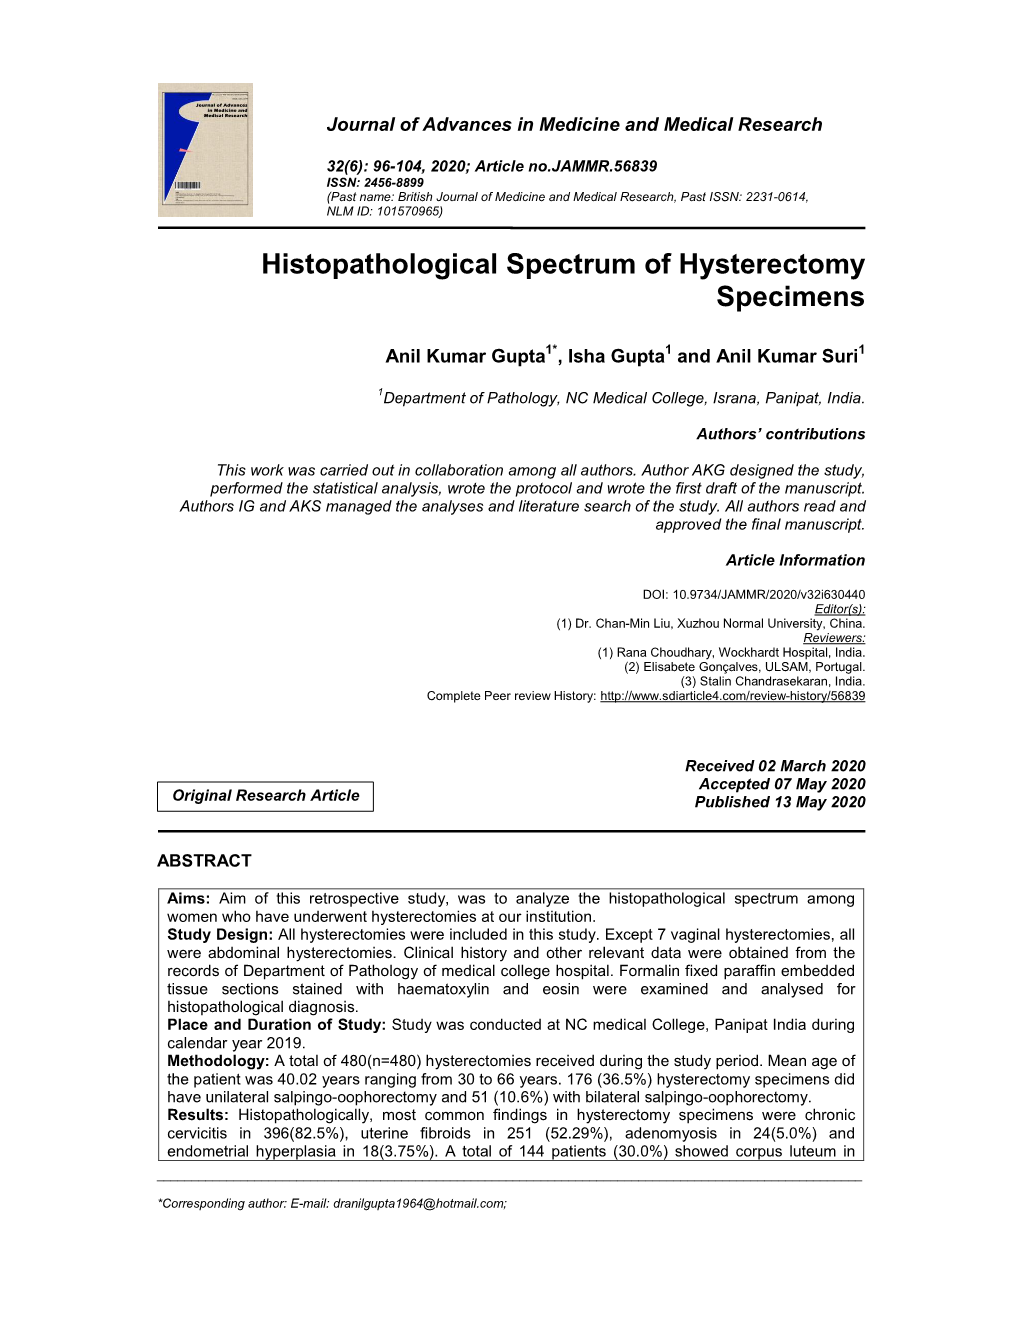 Histopathological Spectrum of Hysterectomy Specimens